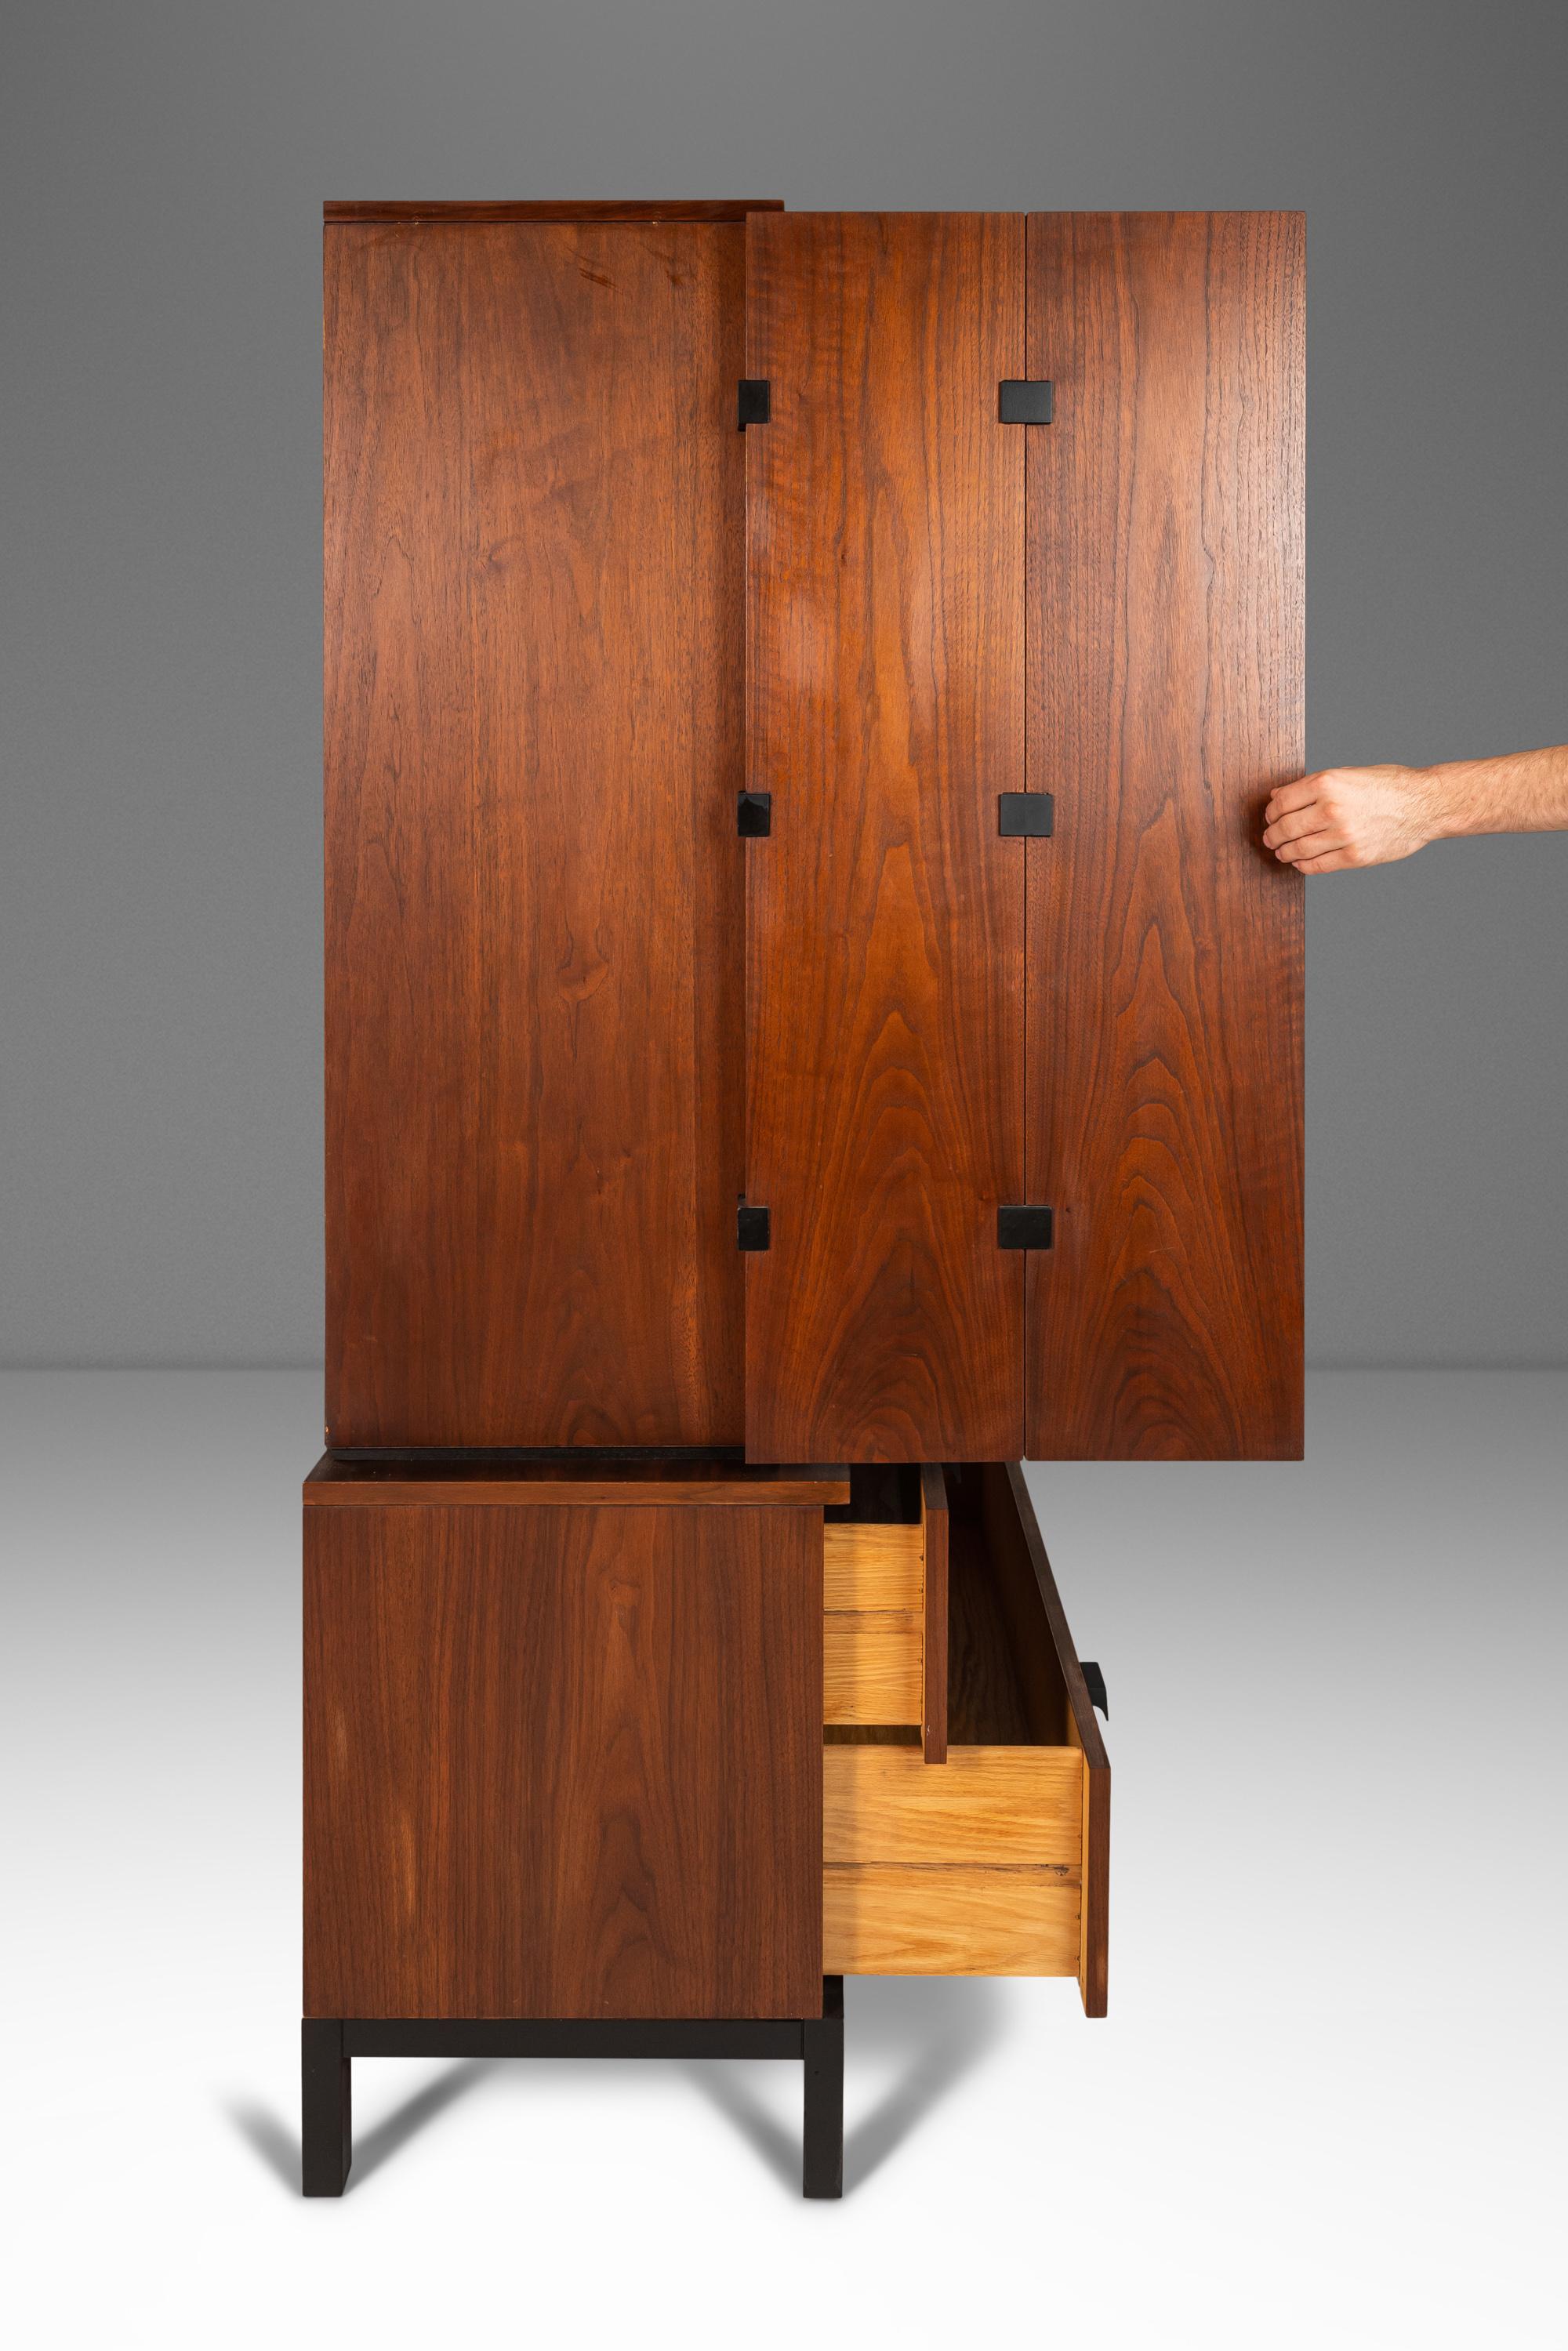 Gentlemen's Chest / Dresser in Walnut by Milo Baughman for Directional, c. 1960s 2